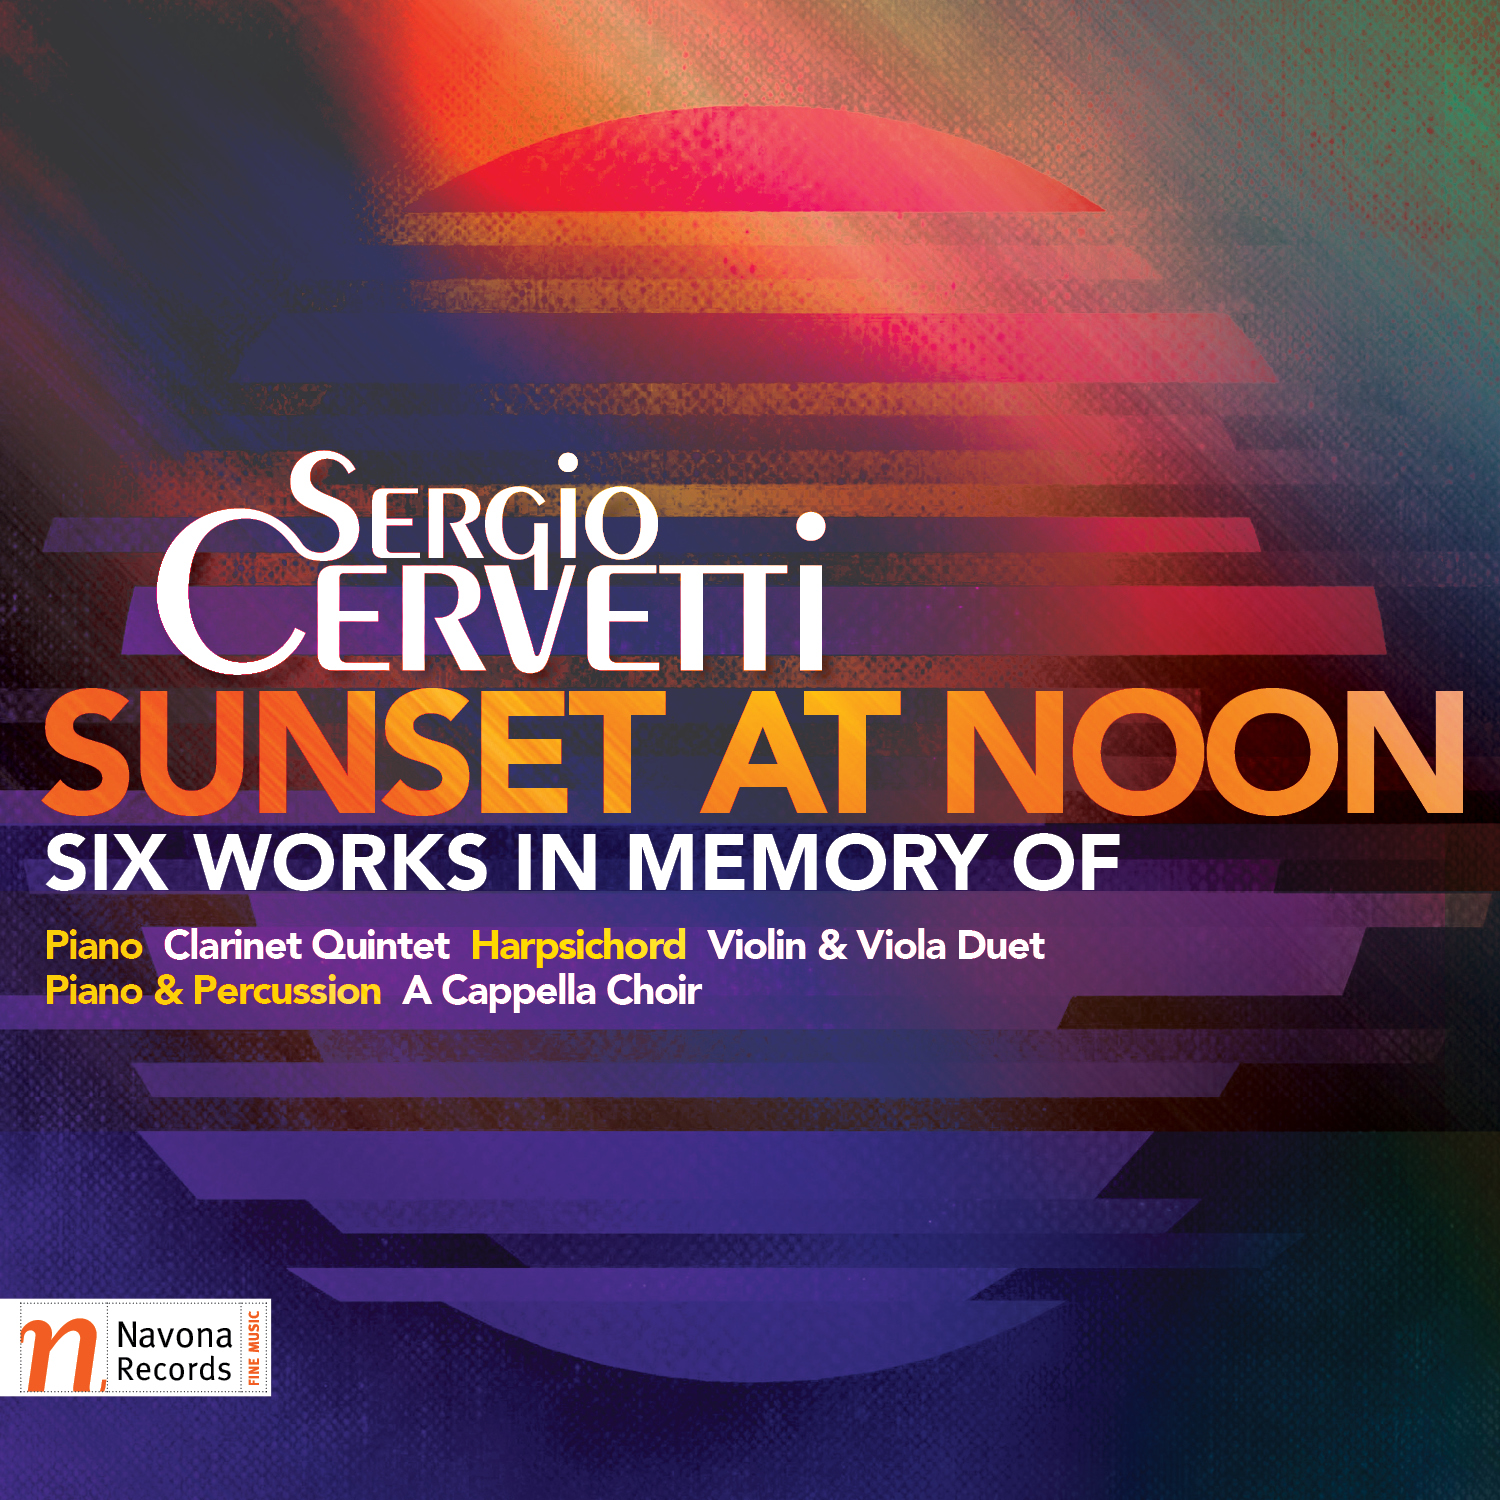 Sergio Cervetti - Sunset at Noon